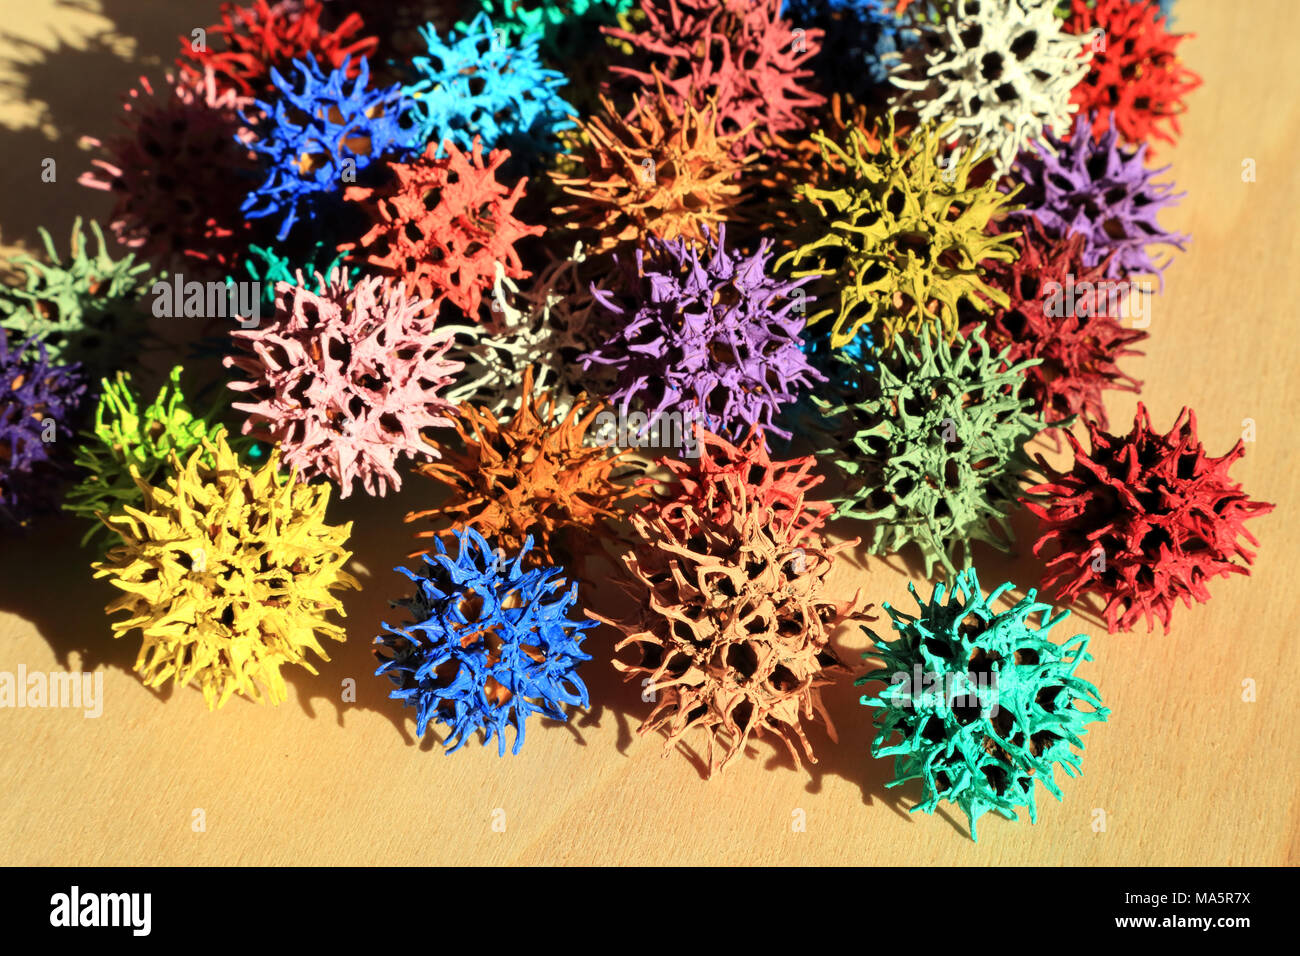 Farben - Farbkombinationen - American sweetgum Baum Kugeln Stockfoto